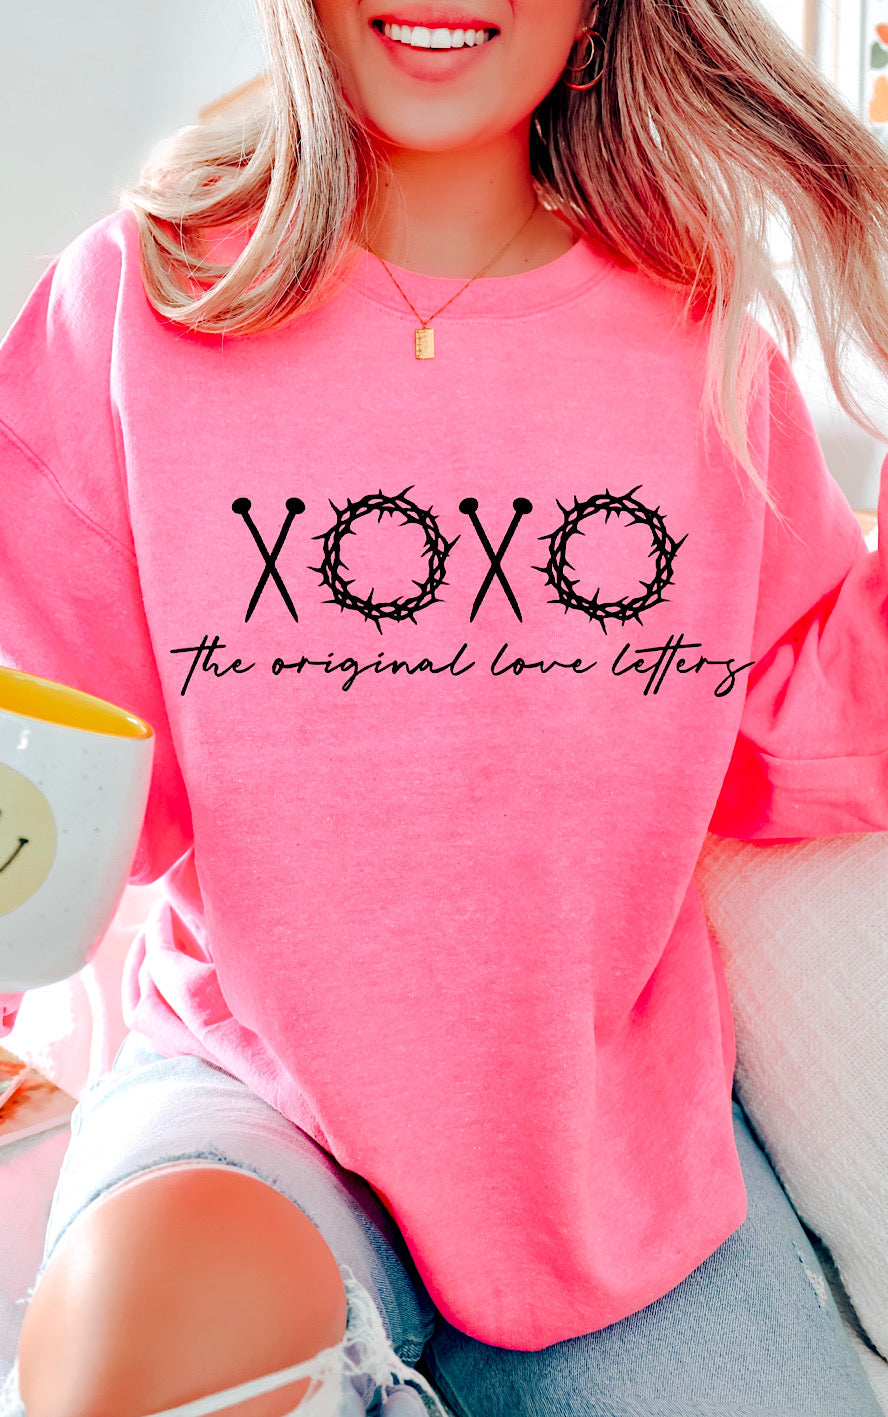 XOXO Original Love Letters Pink Sweatshirt, SM-3X